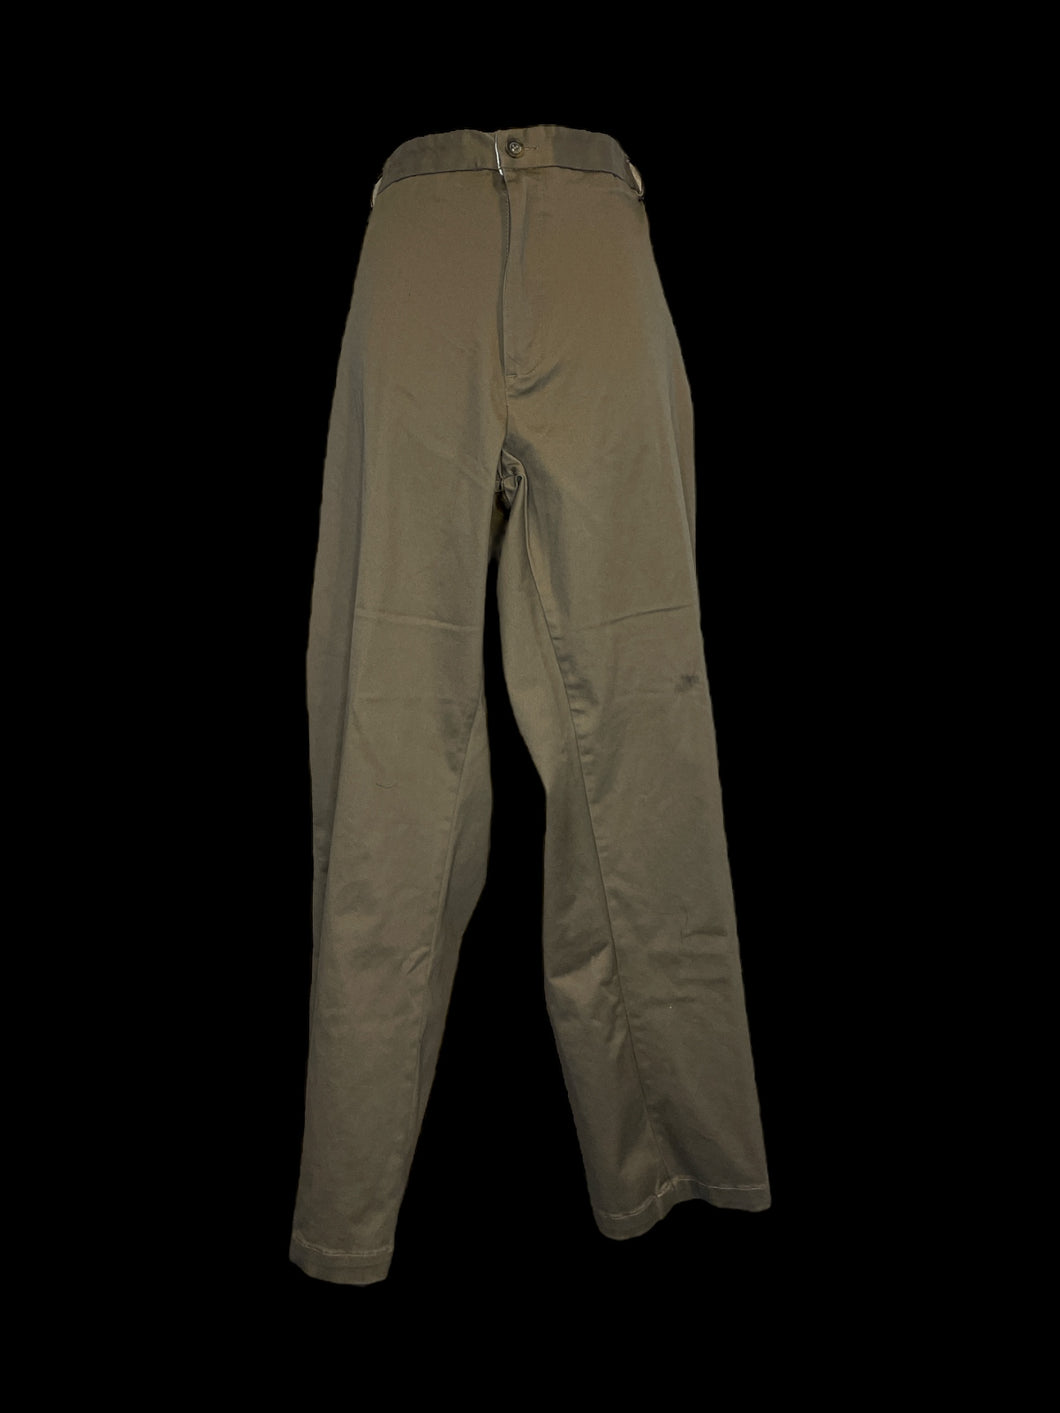 2X Taupe pants w/ belt loops, pockets, & zipper/button closure